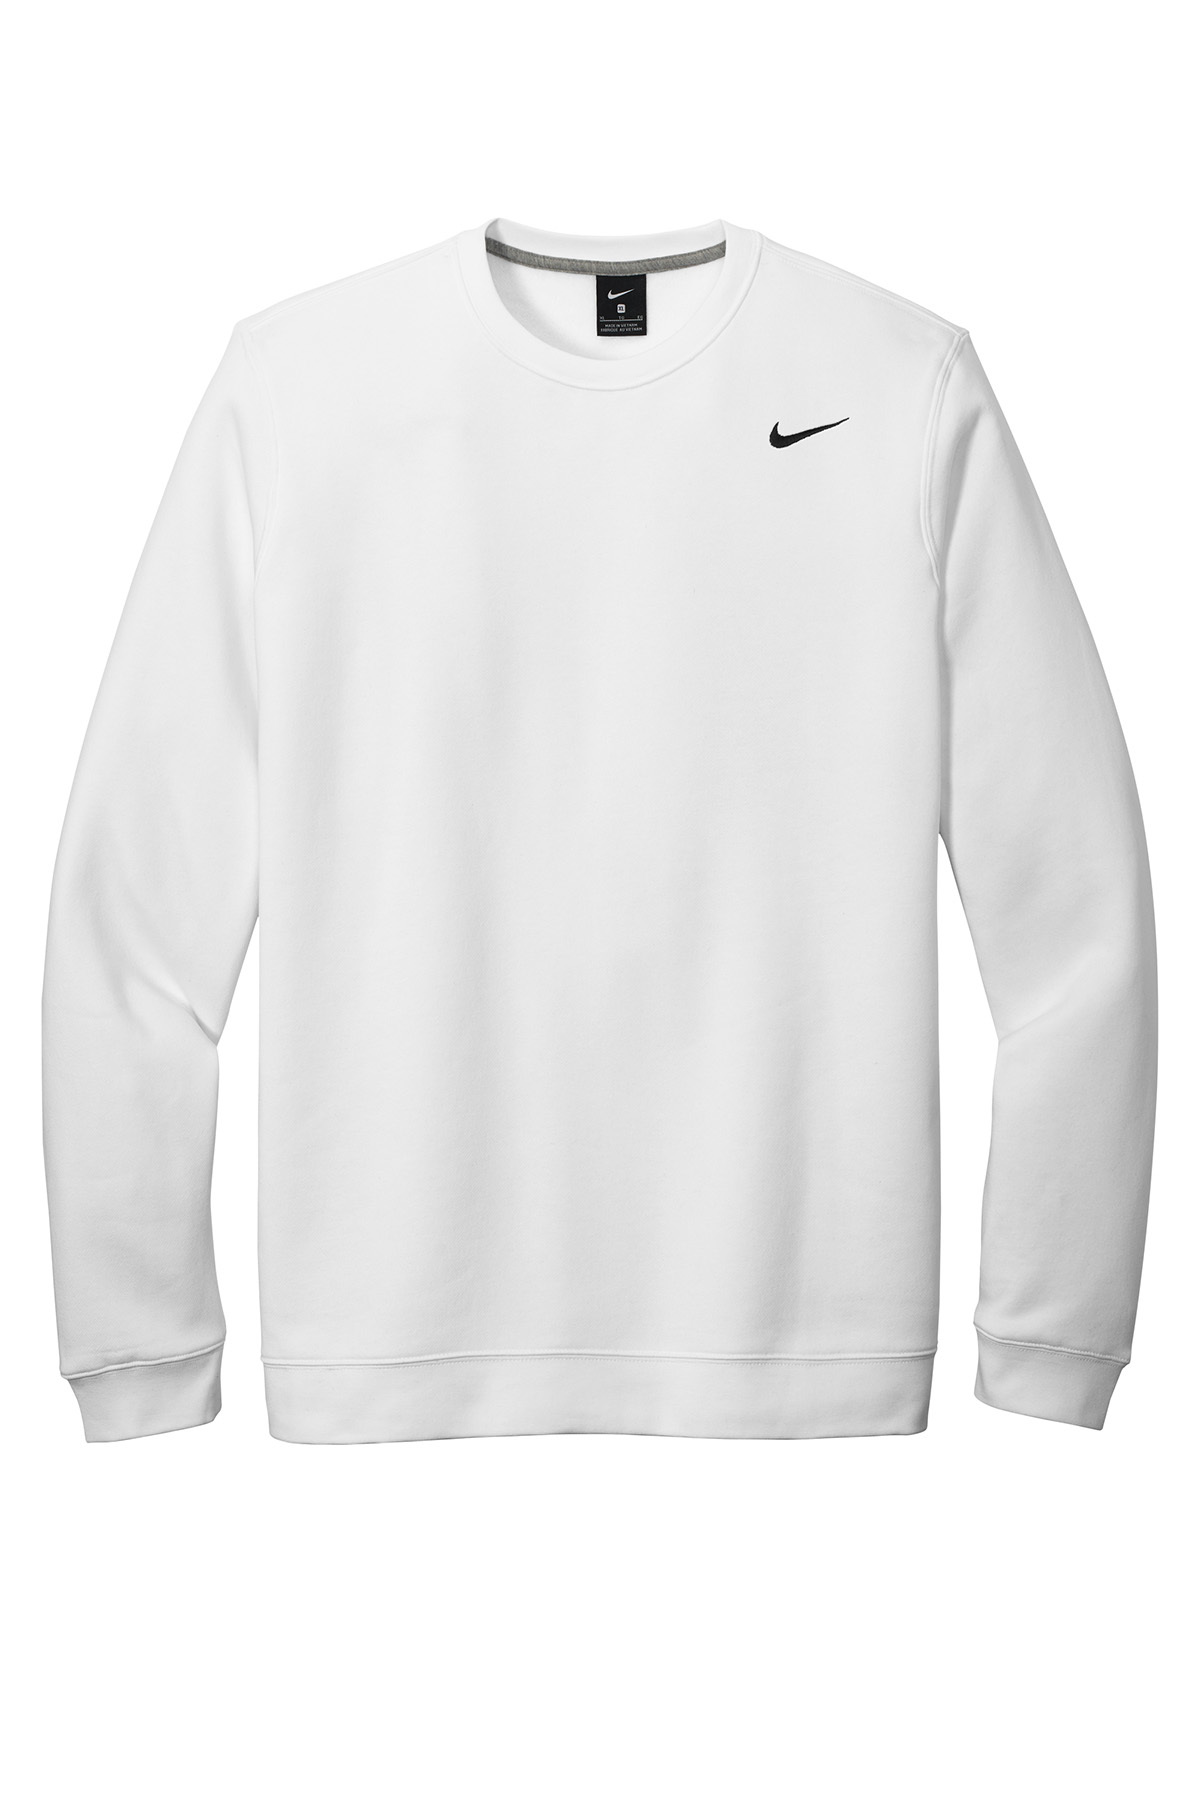 Nike Club Fleece Crew | Product | Company Casuals